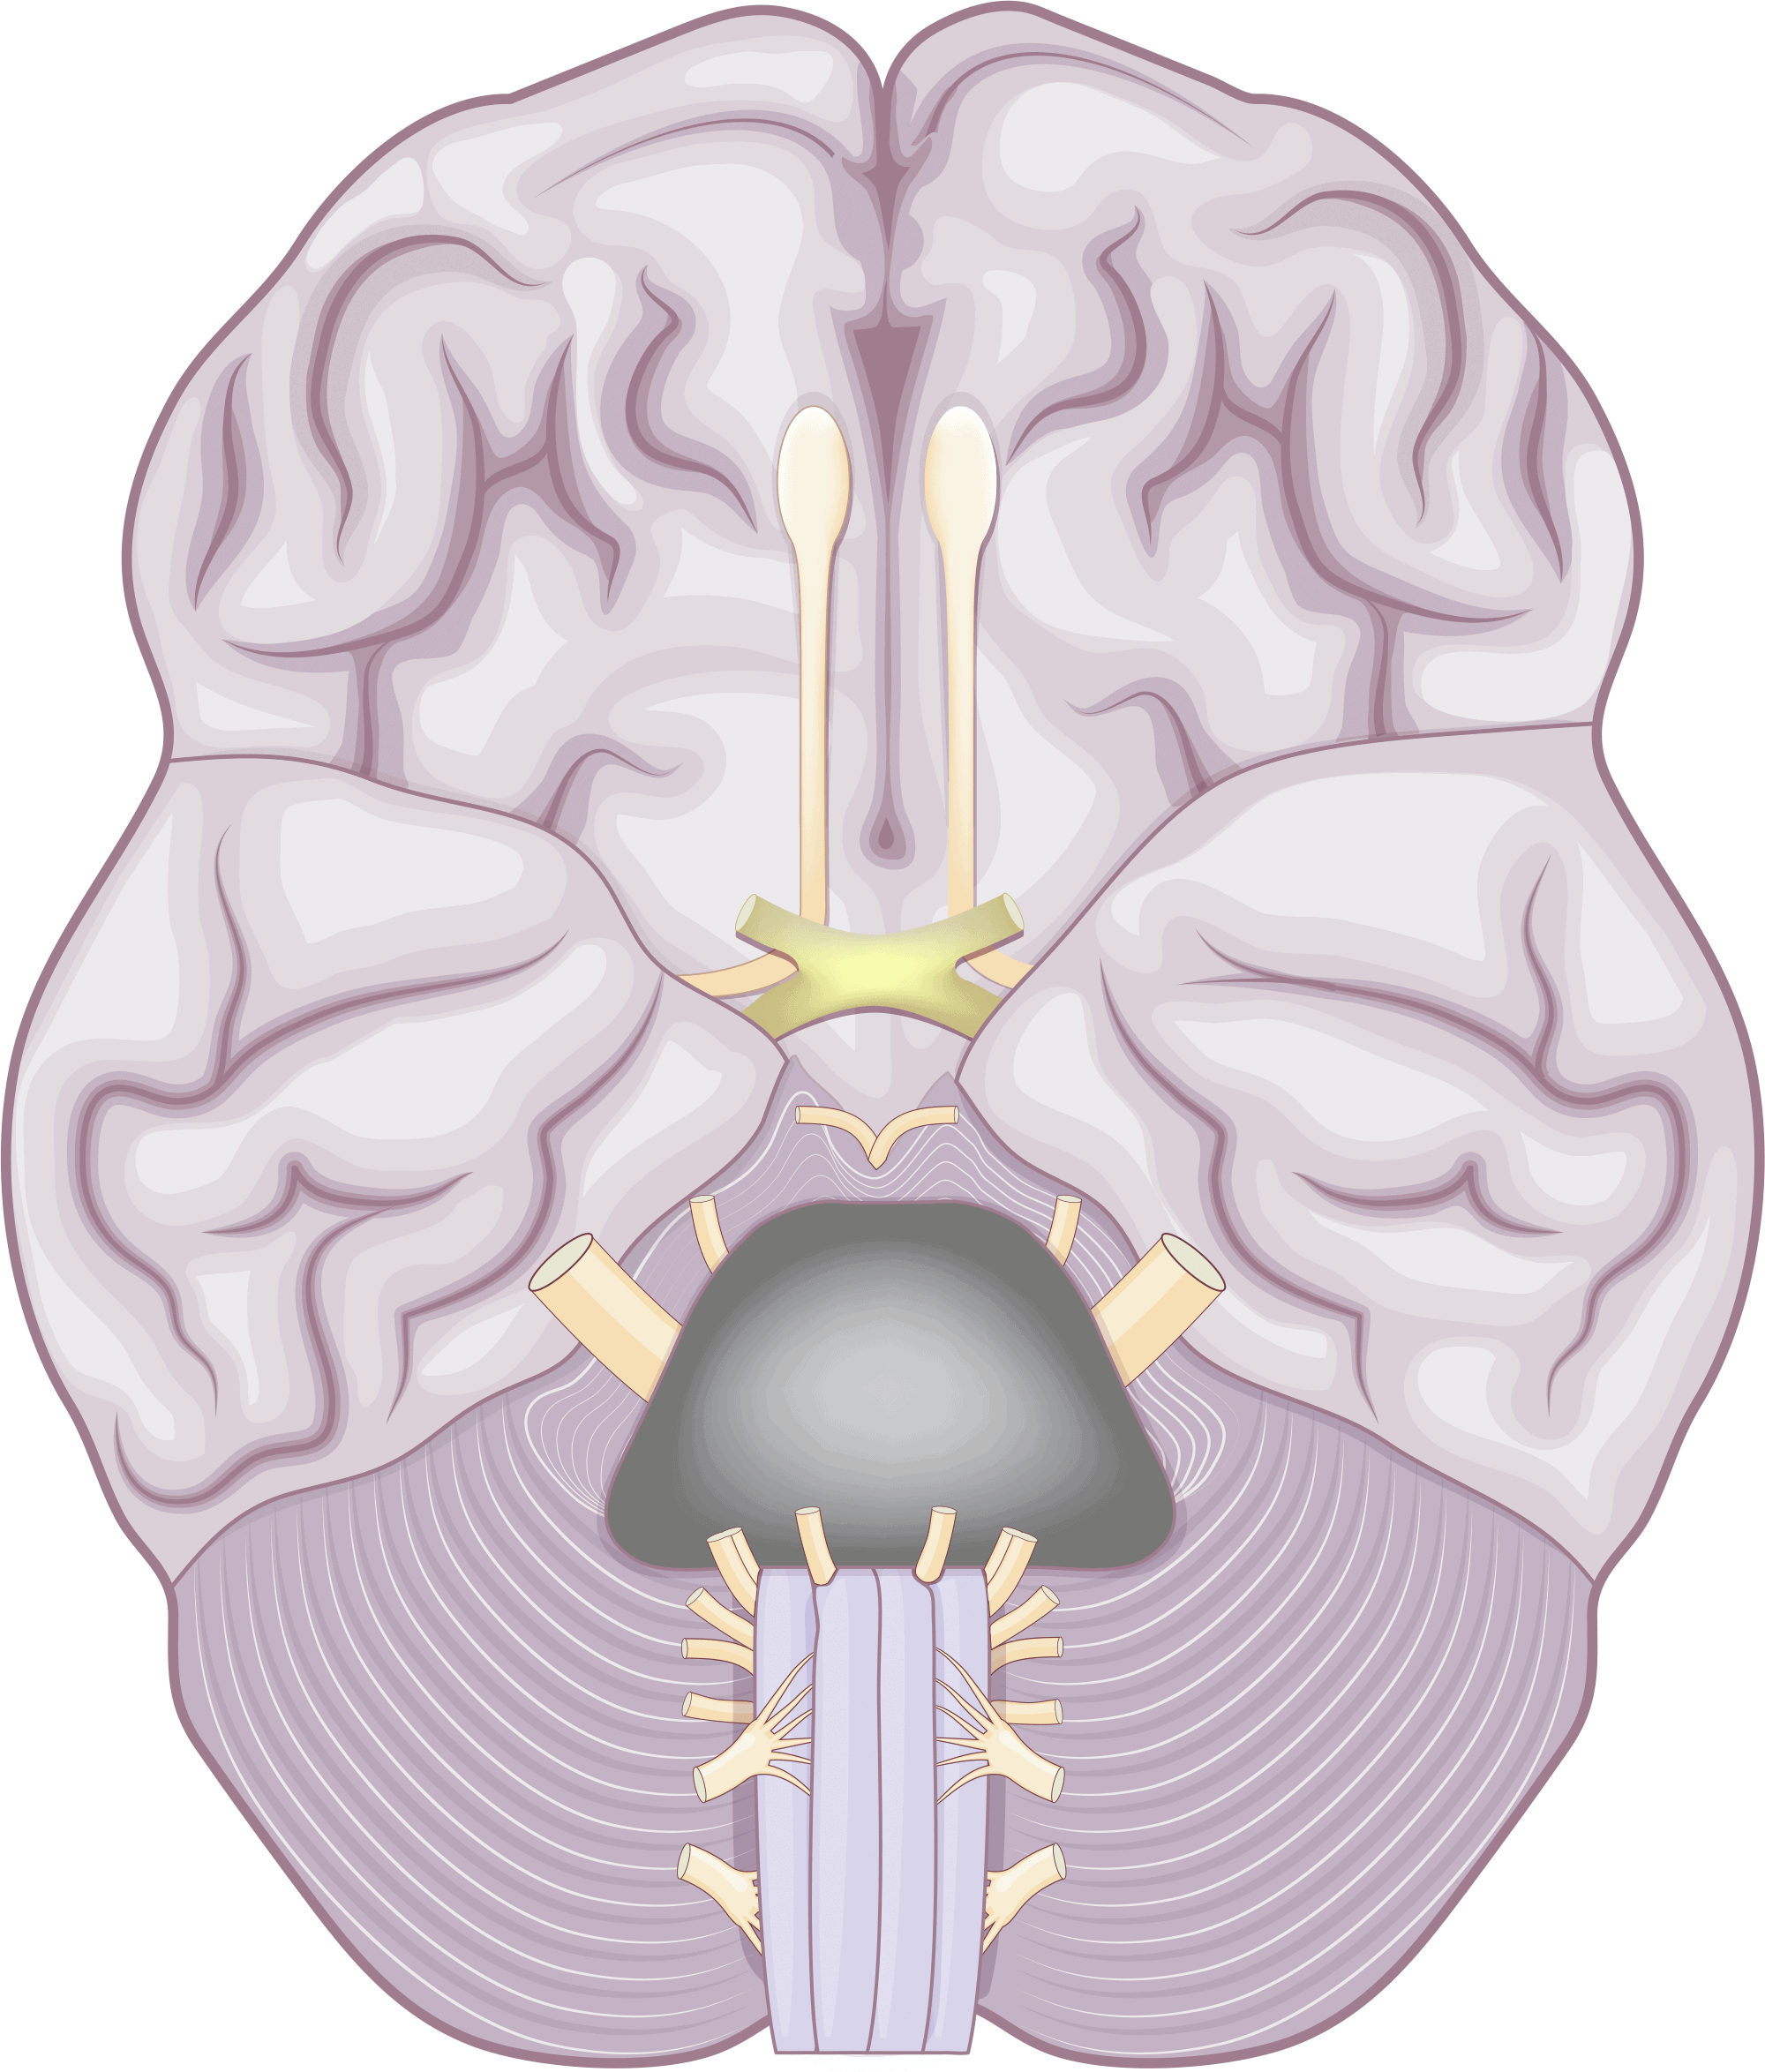 Cranian nerves